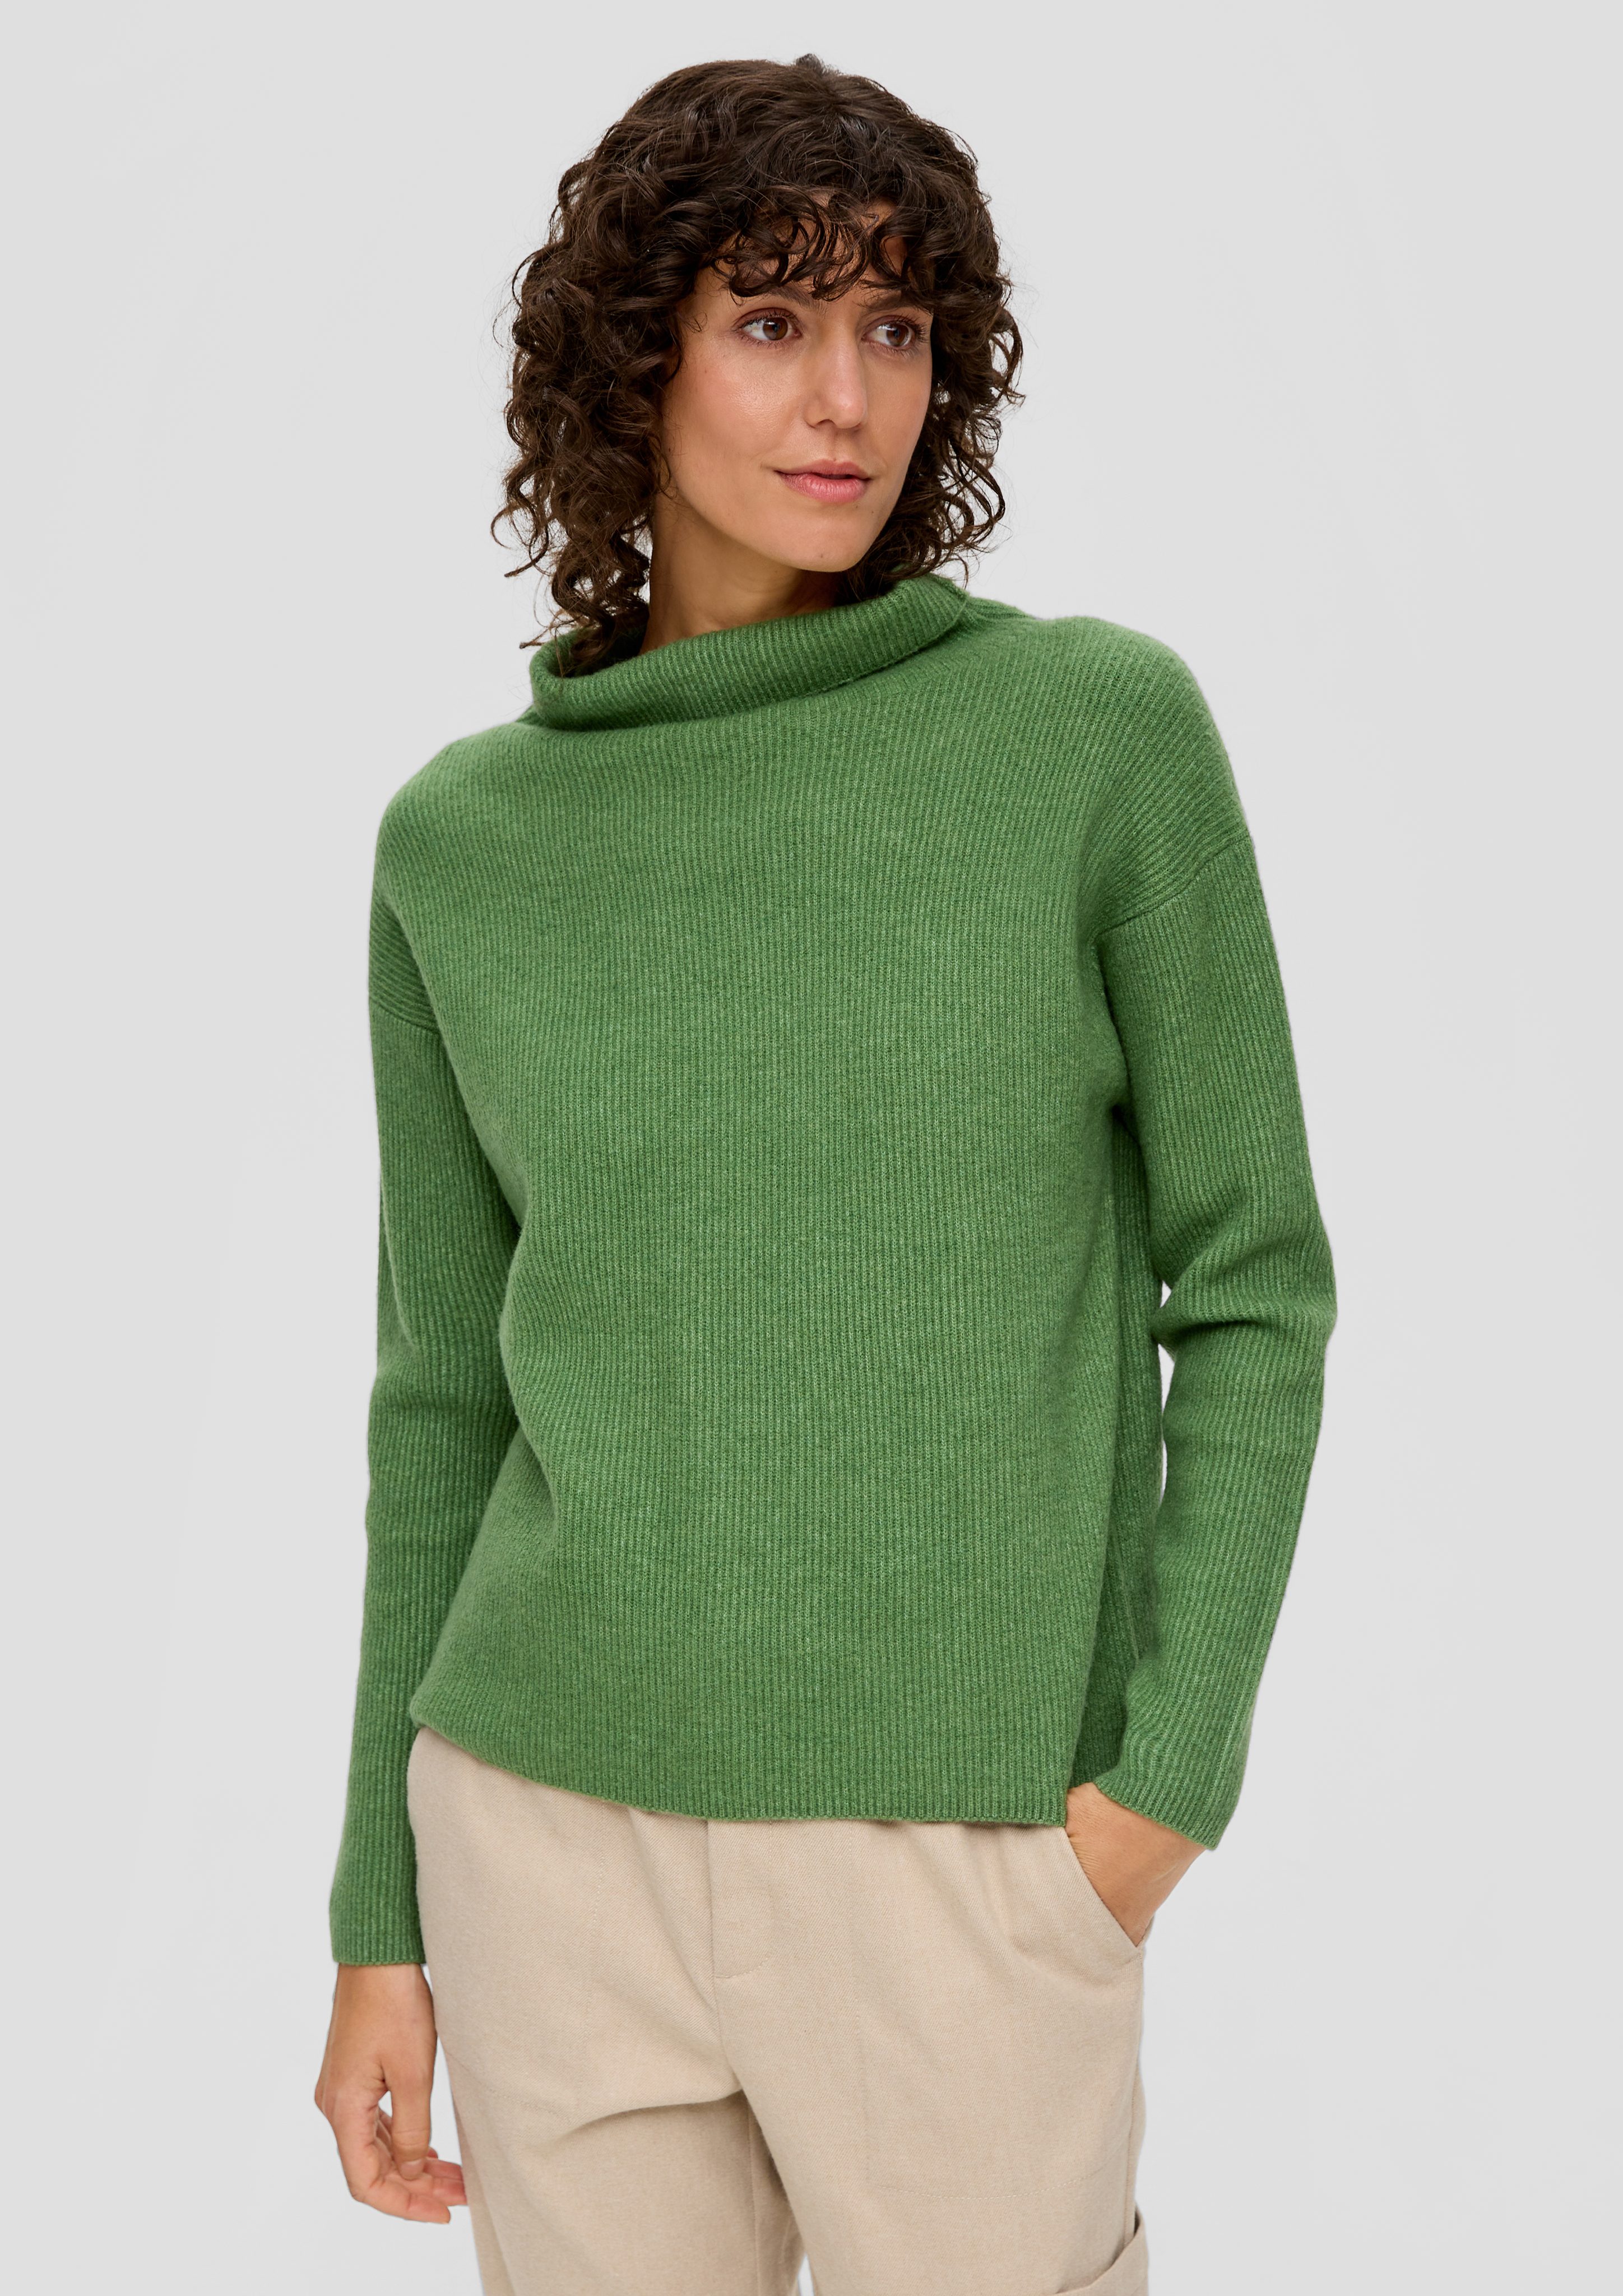 s.Oliver Strickpullover Pullover in grün Rippstrick-Qualität